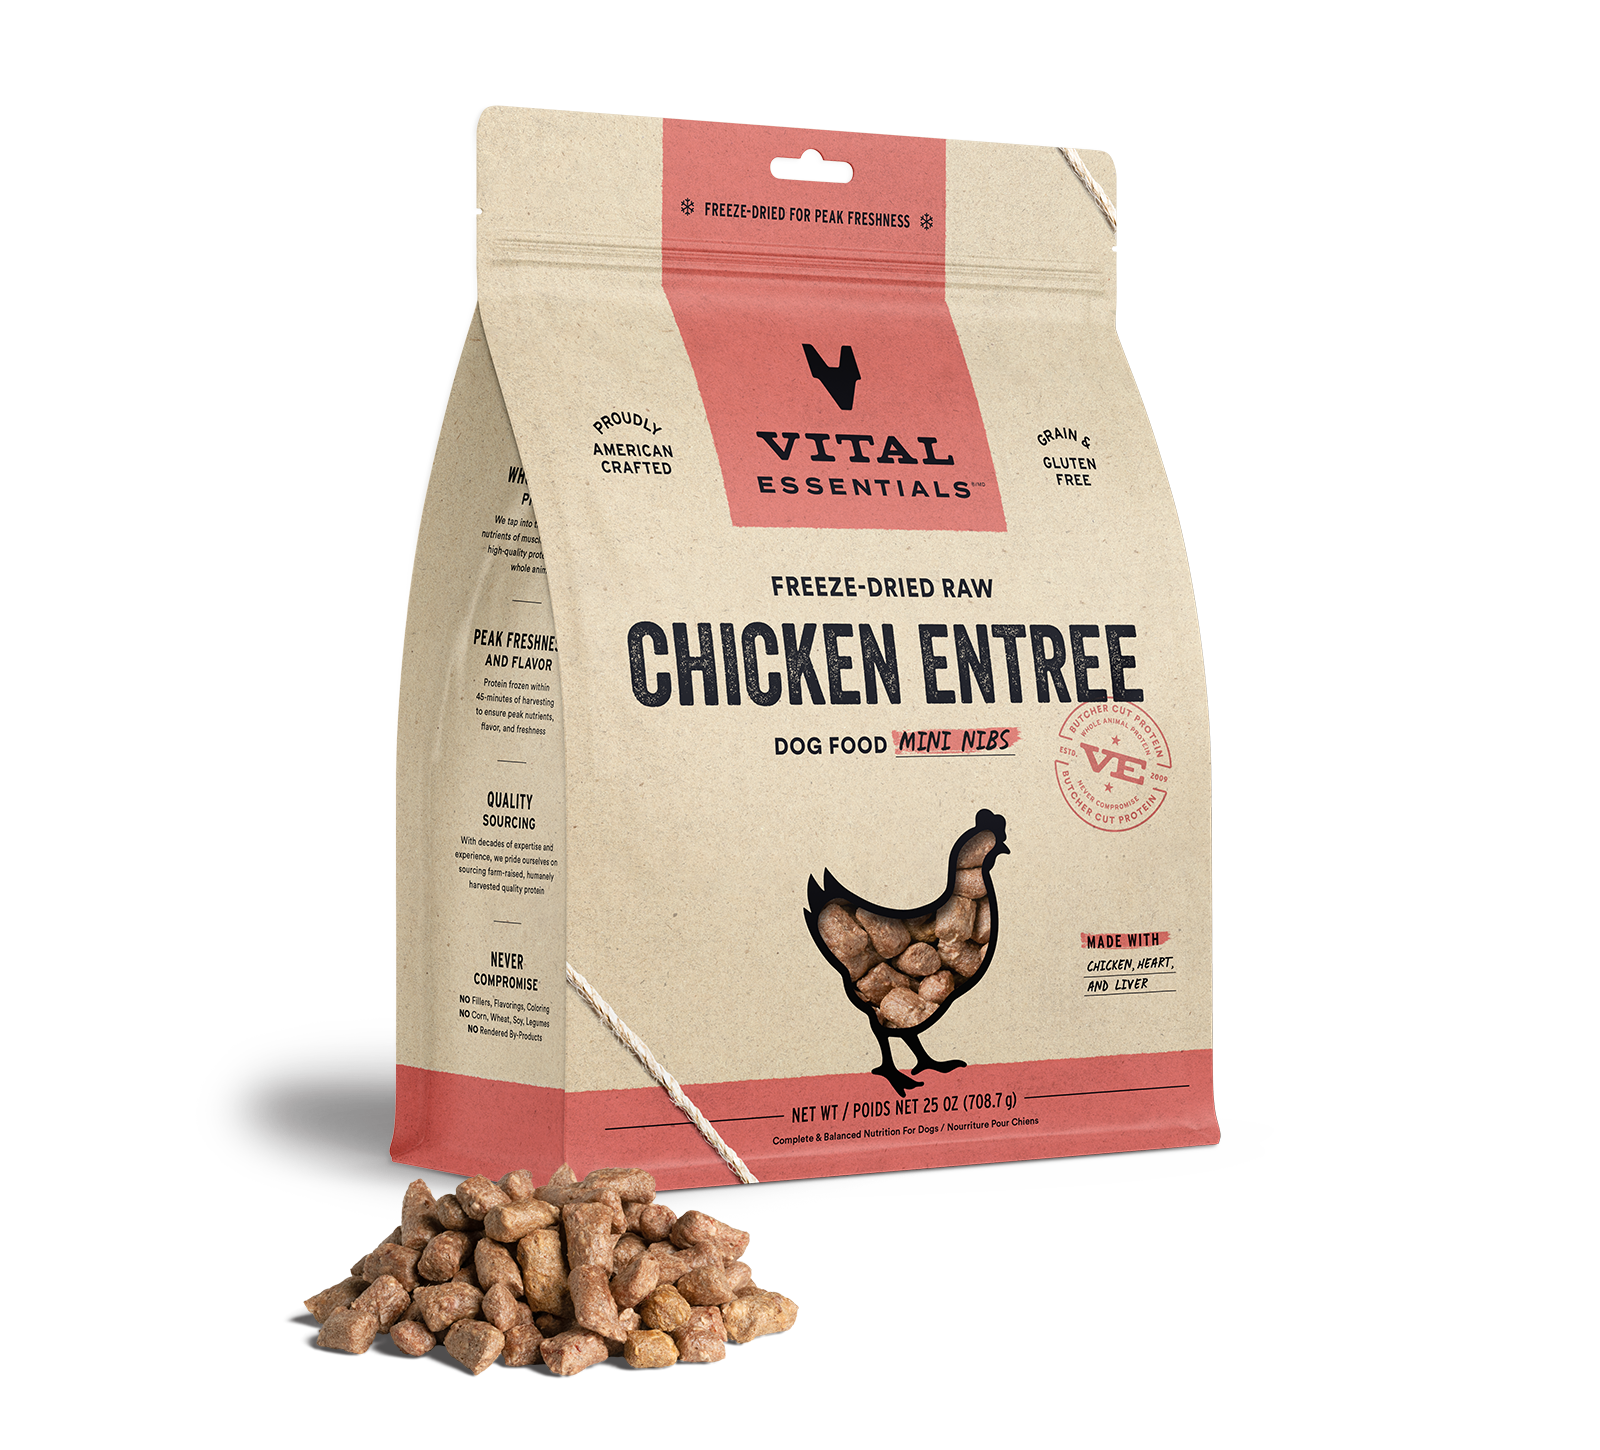 Vital Essentials Freeze-Dried Raw Chicken Entree Dog Food Mini Nibs, 25 oz - Items on Sale Now